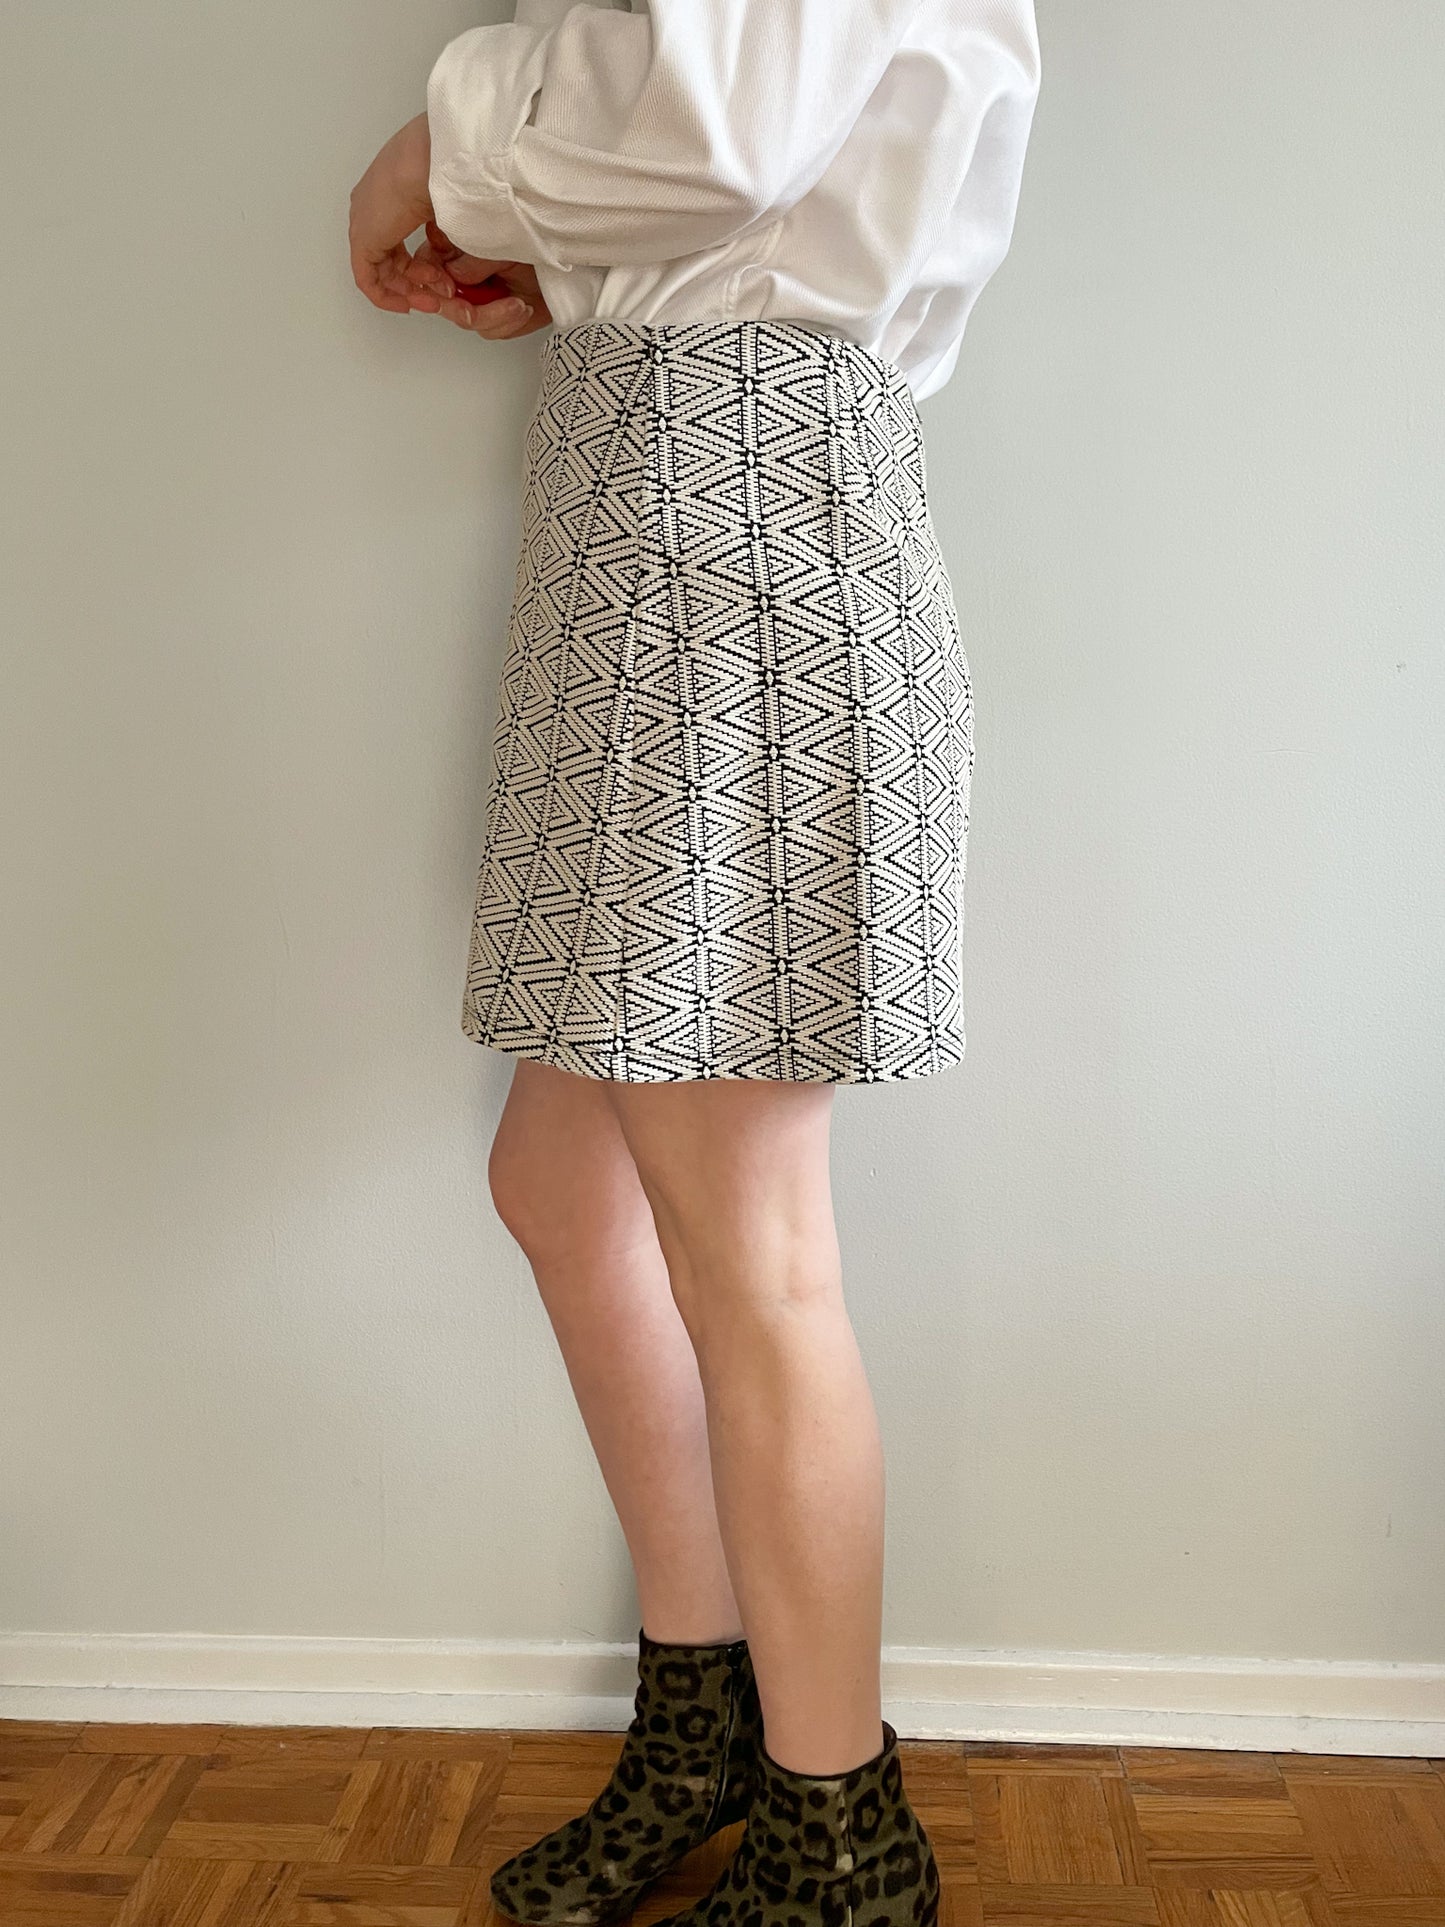 Topshop Black White Triangle Graphic Knit Mini Skirt - Size 10